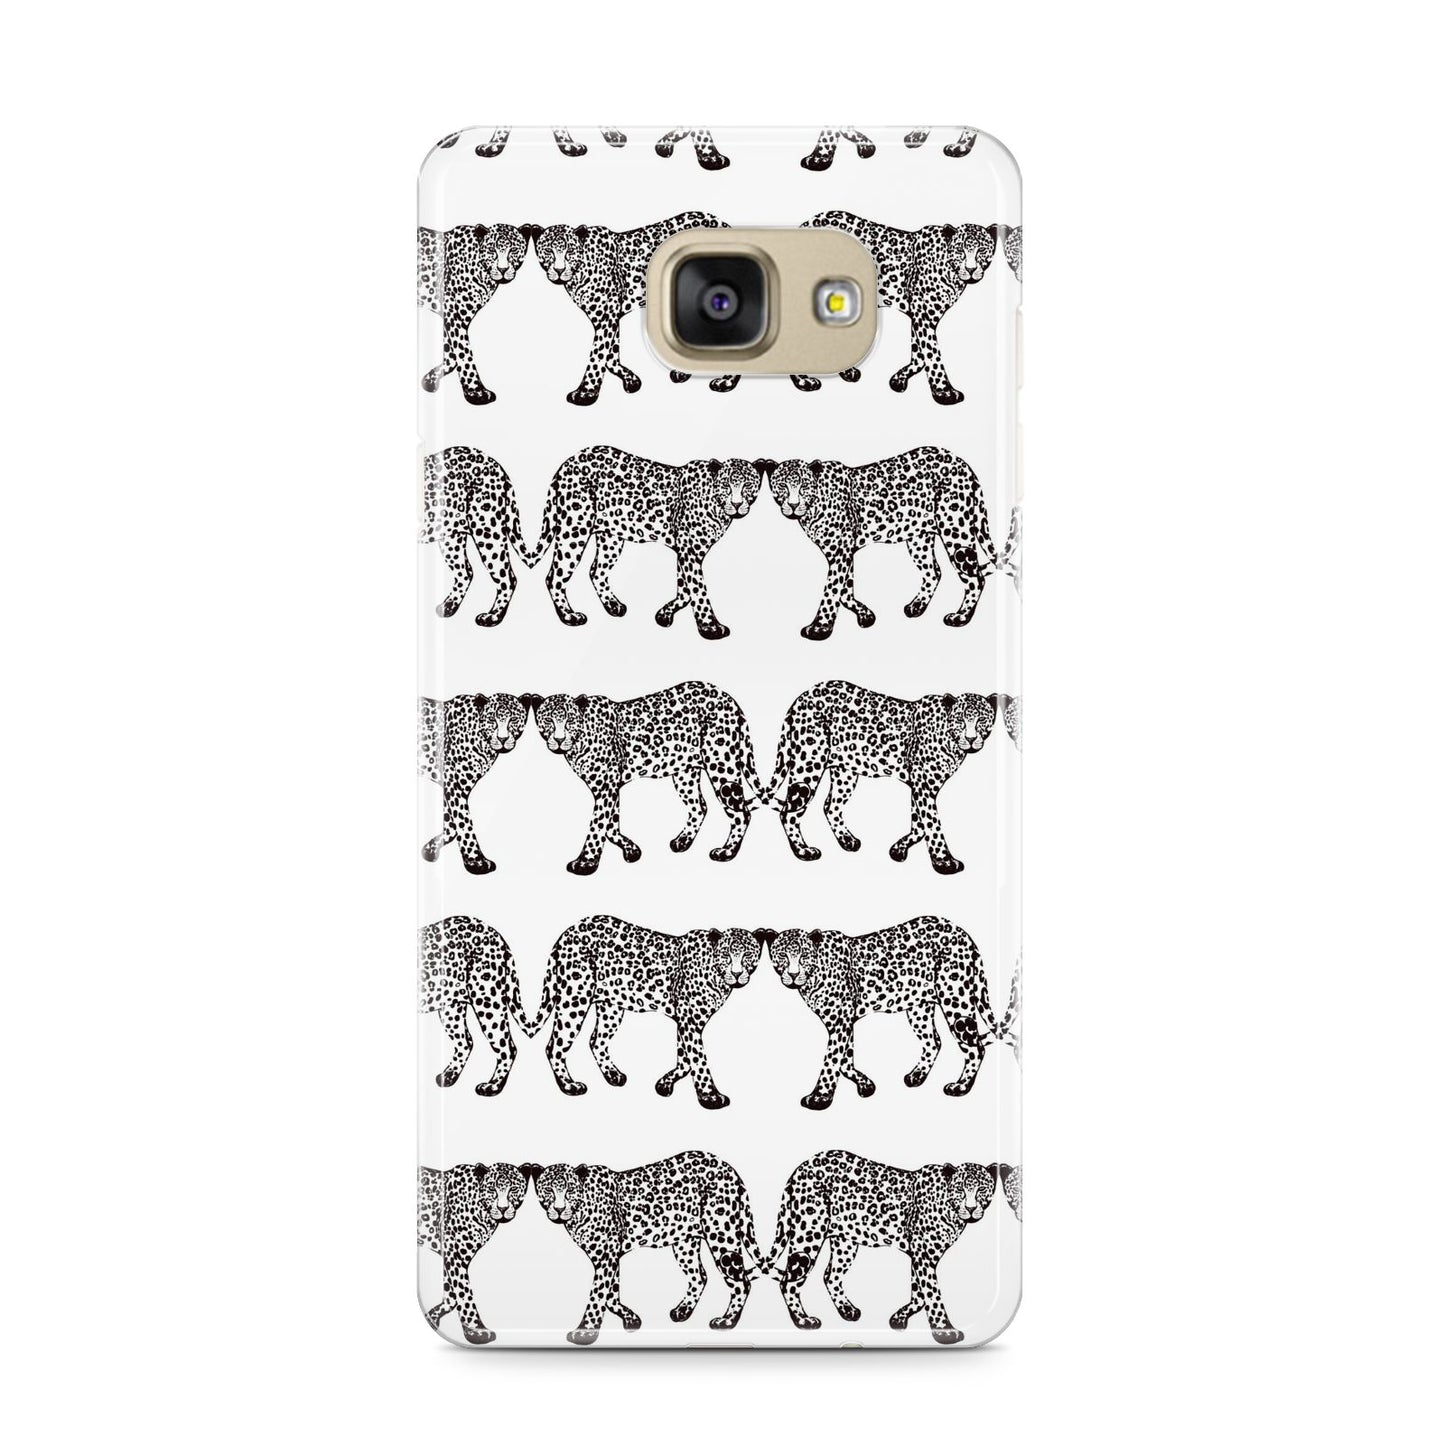 Monochrome Mirrored Leopard Print Samsung Galaxy A9 2016 Case on gold phone